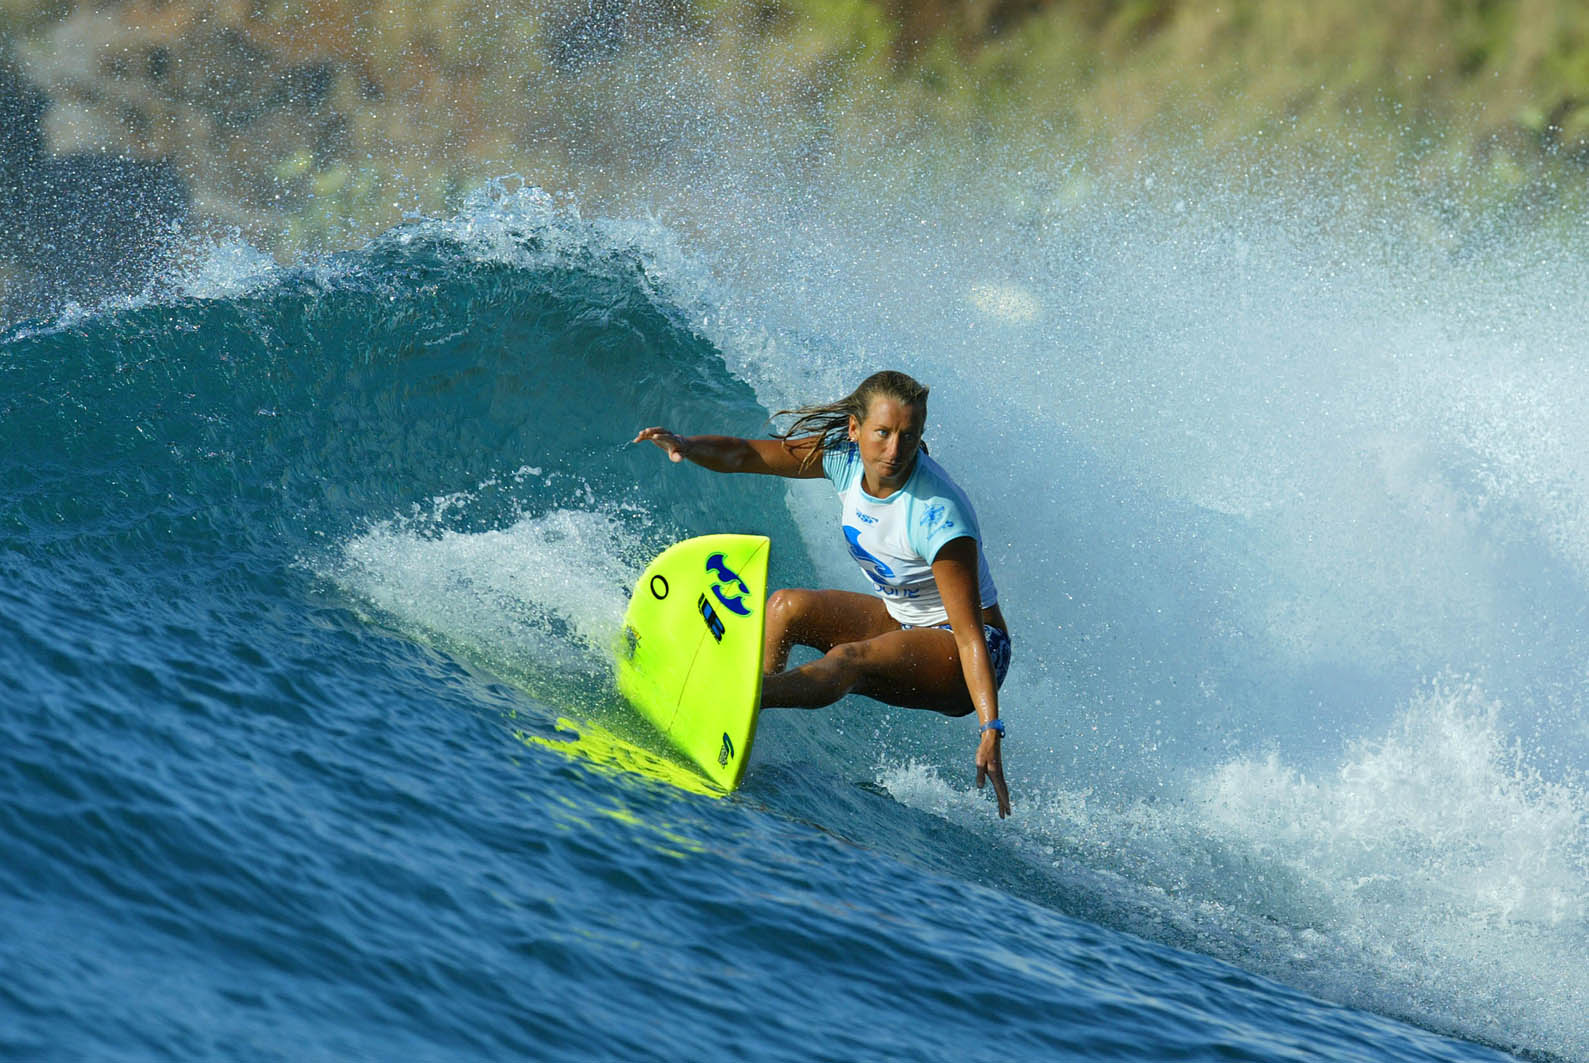 surf wallpaper,surfing equipment,sports,water sport,wave,surface water sports